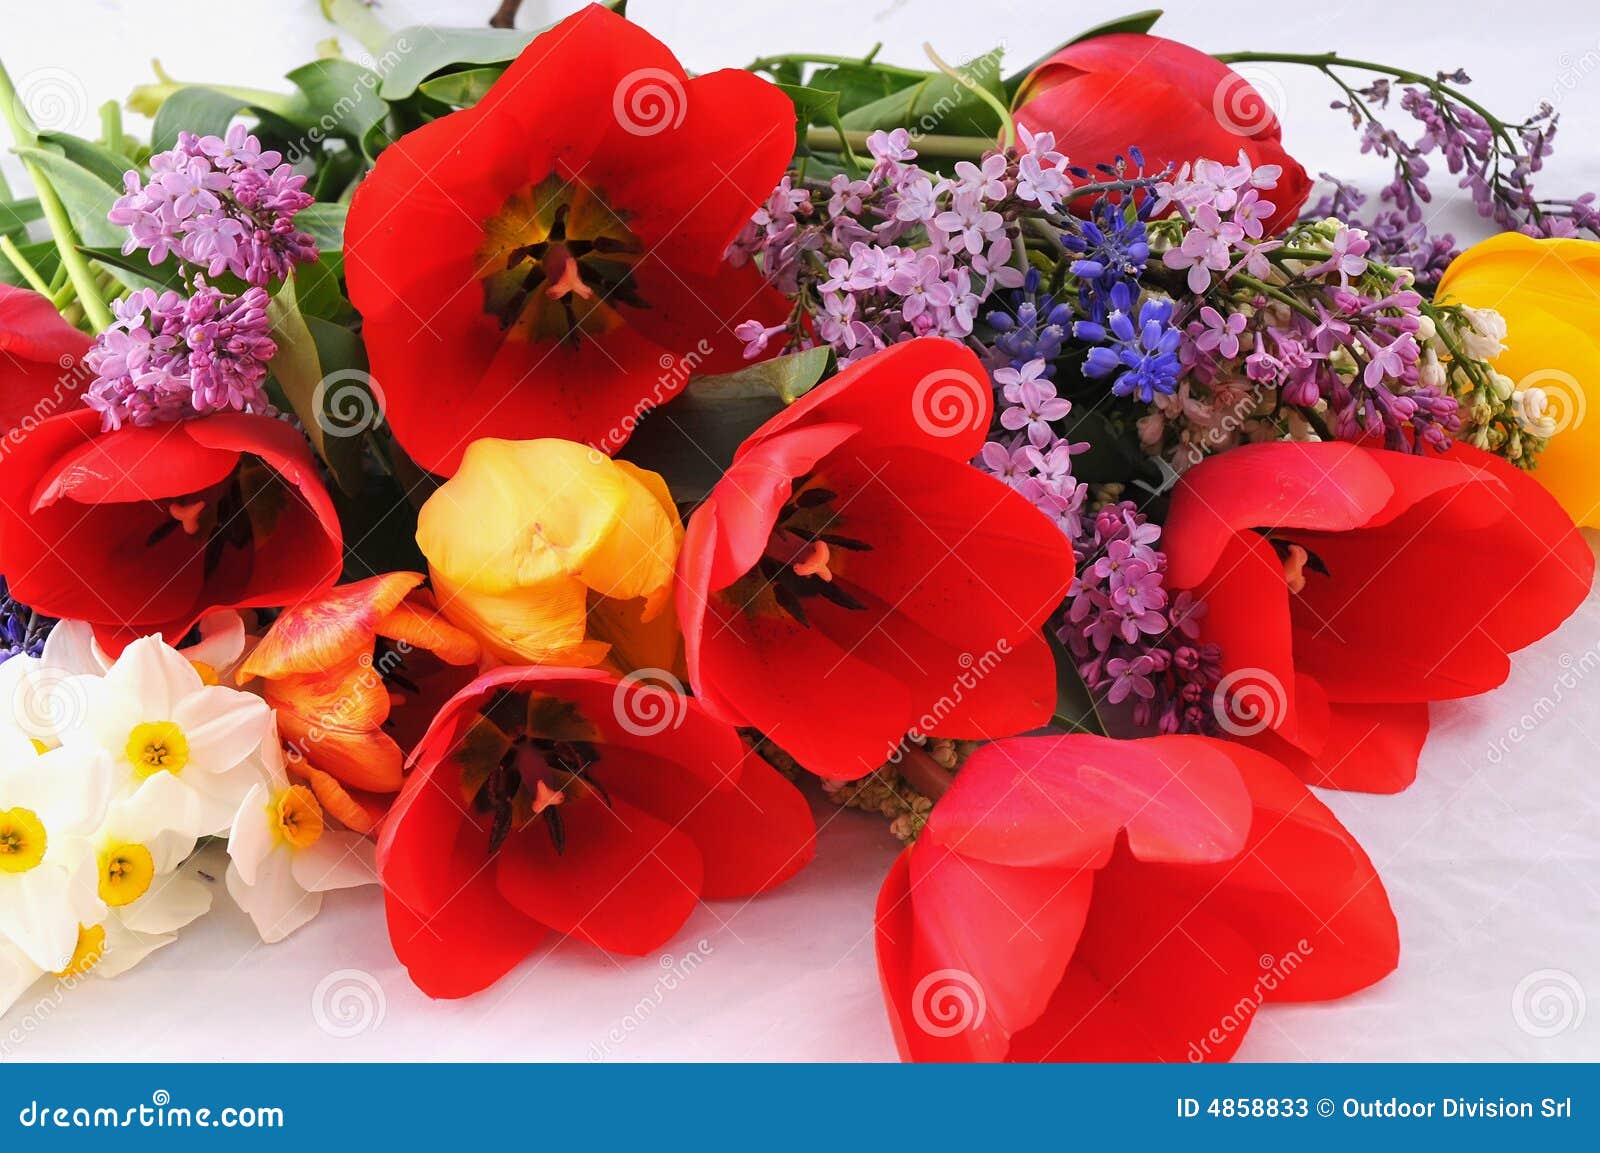 bunch flowers 4858833